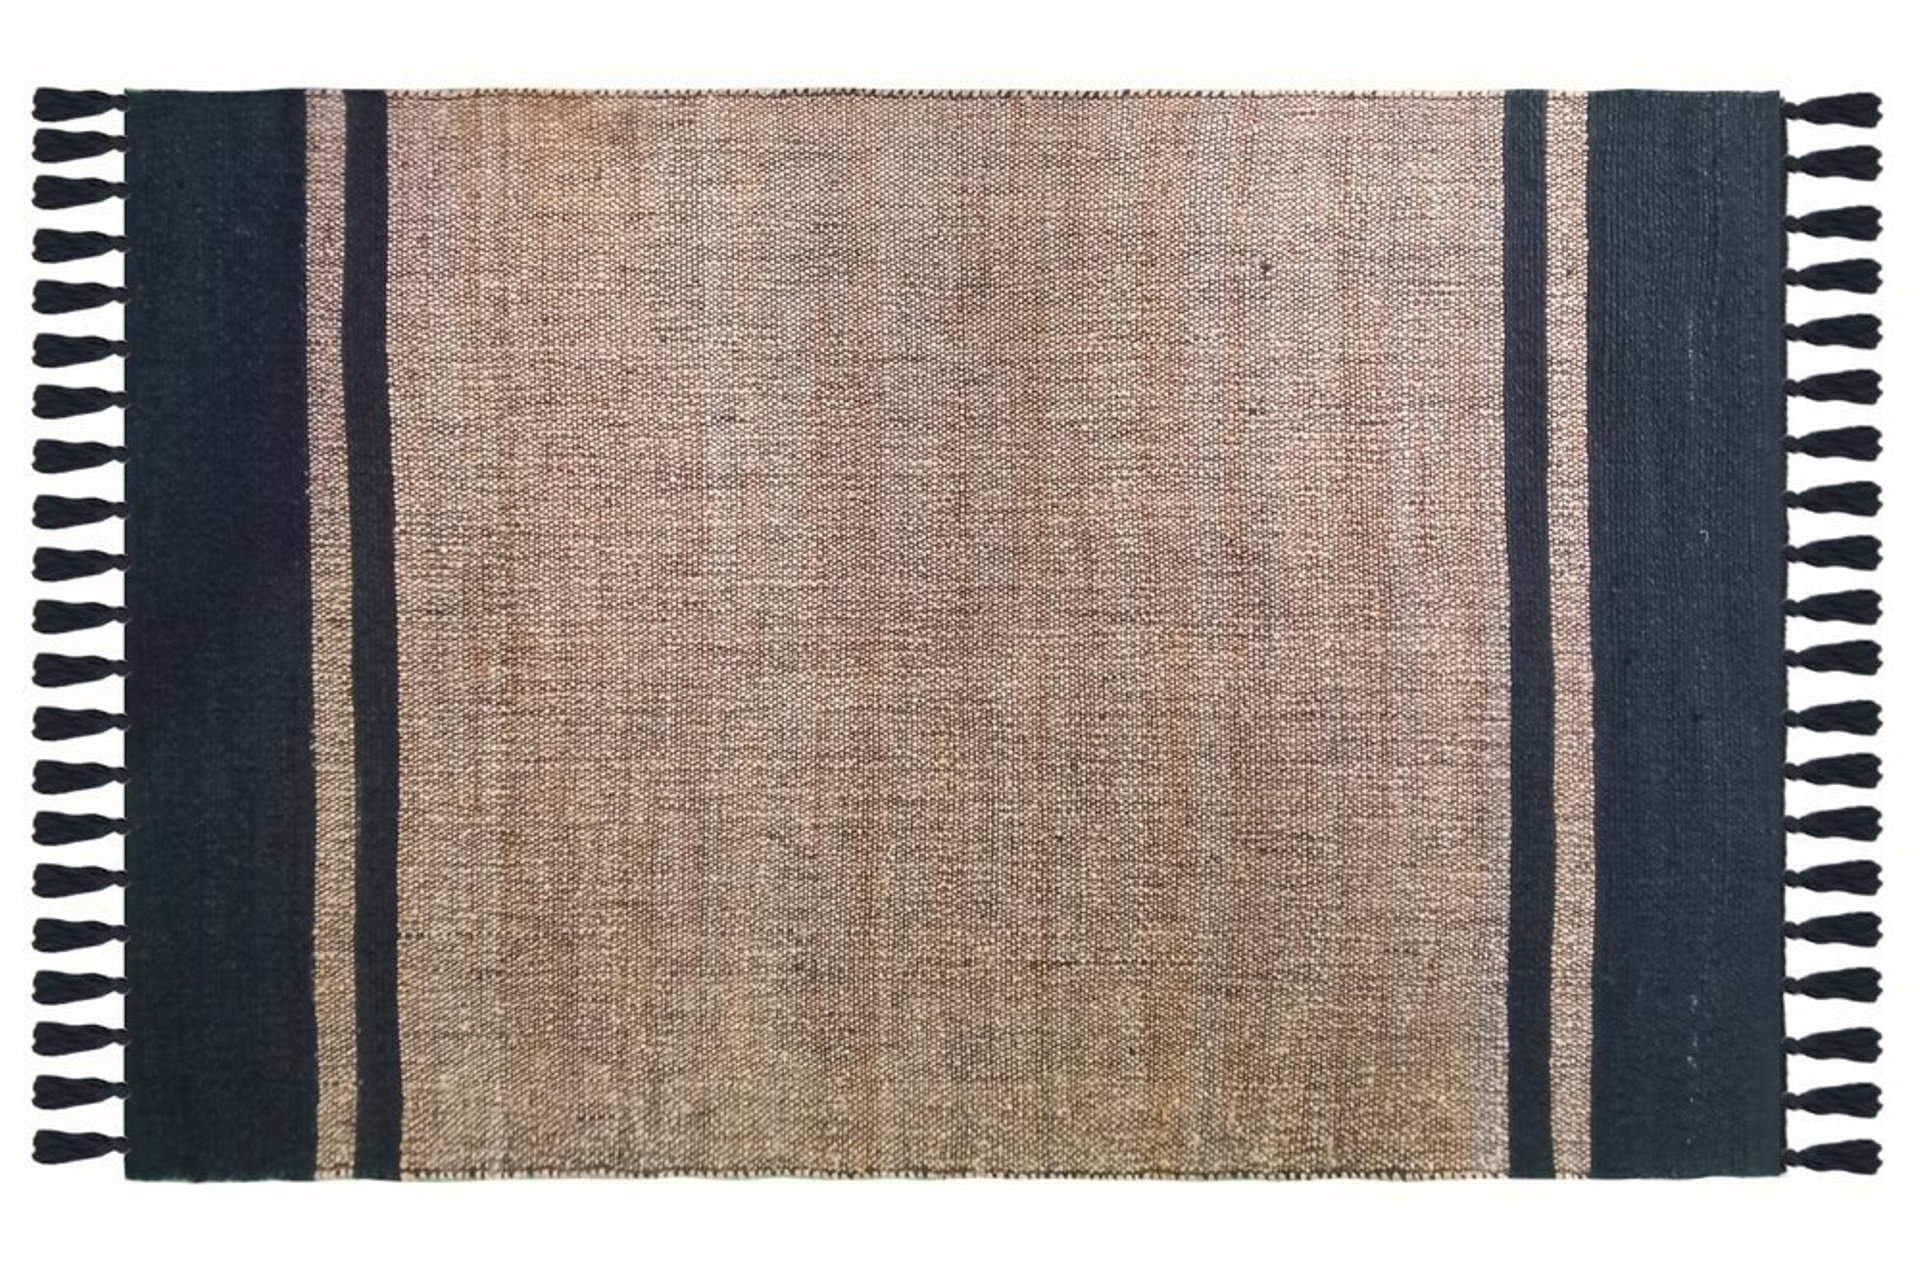 Gizzy Patara Jute-Teppich, 160x230 cm, Braun